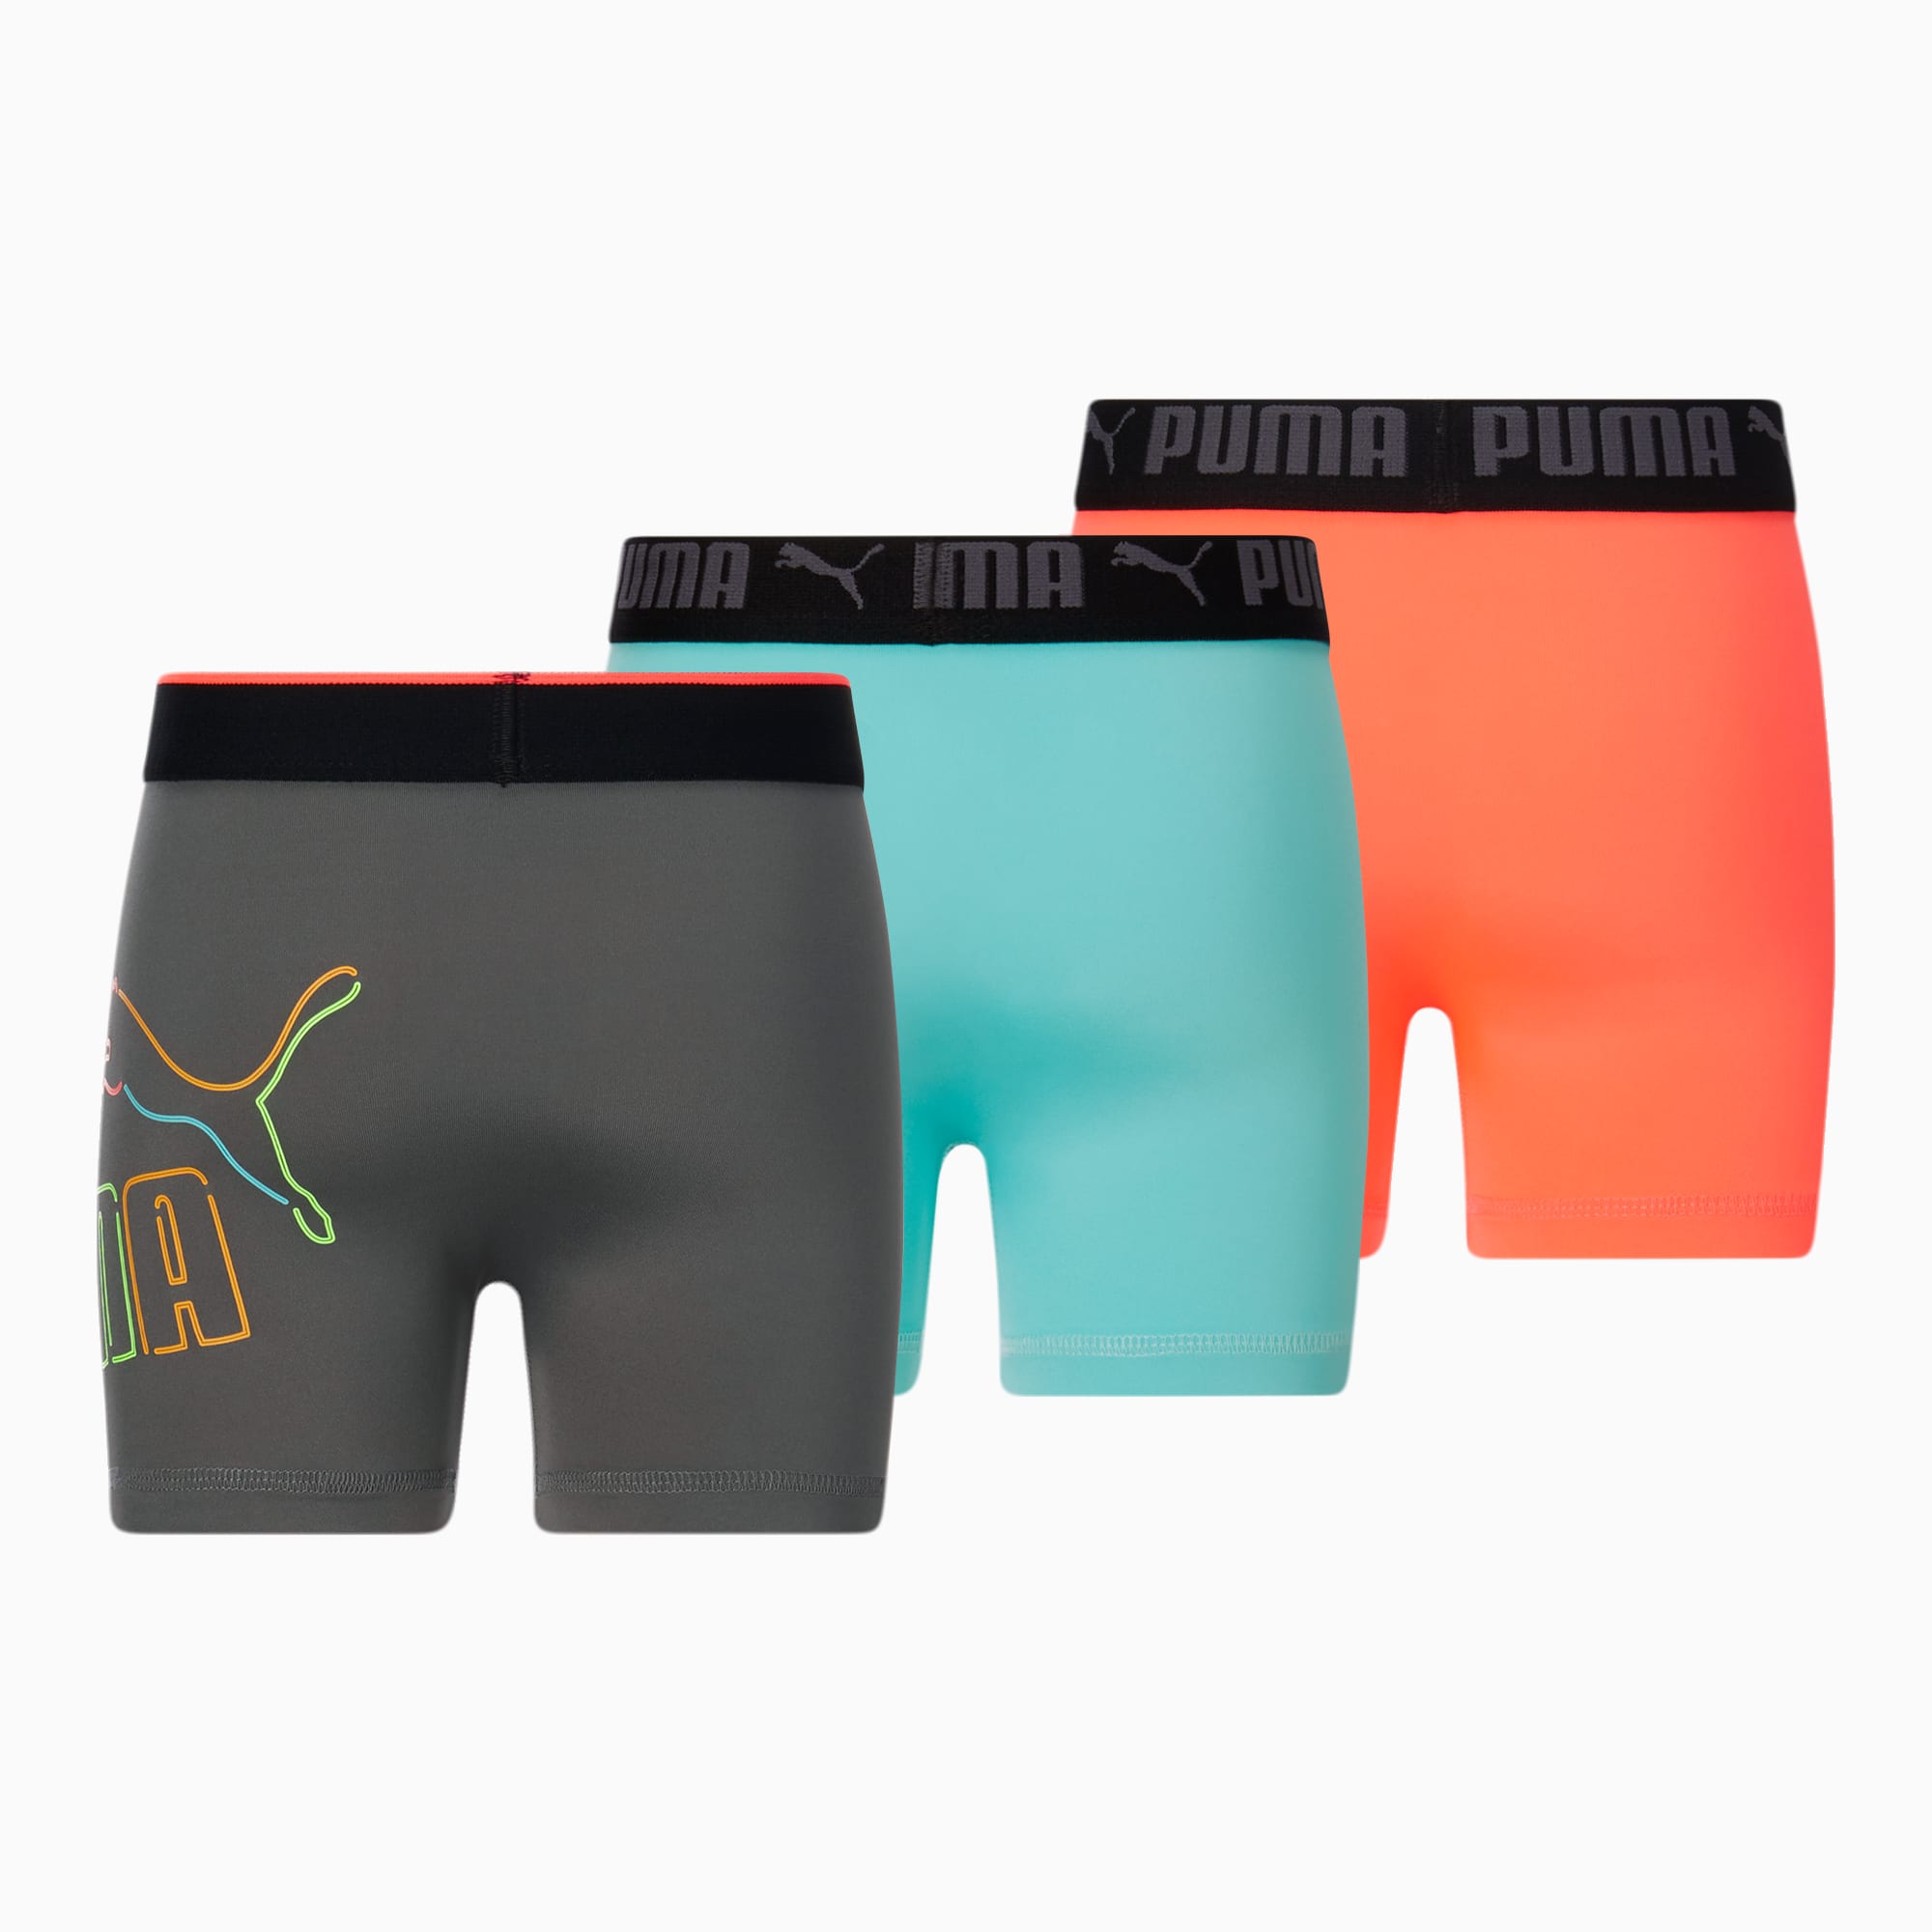 PUMA Boys Boxers Kids Cotton Stretch Plain Boxer Short Briefs Underwear 2  Pairs